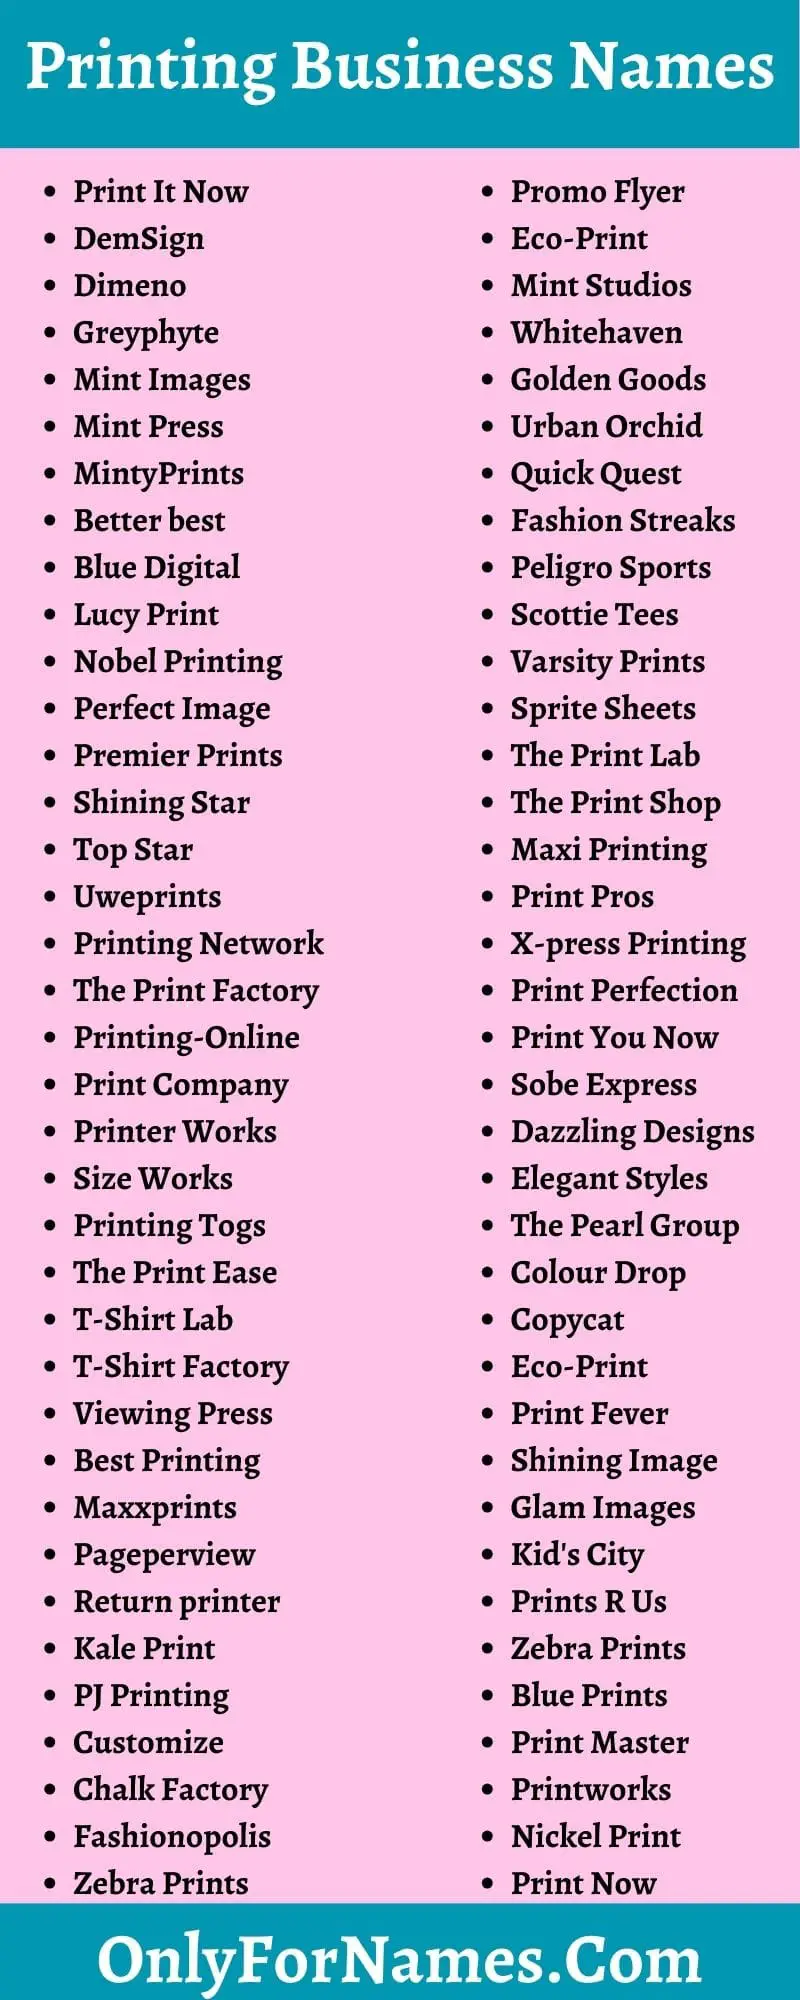 Printing Business Names